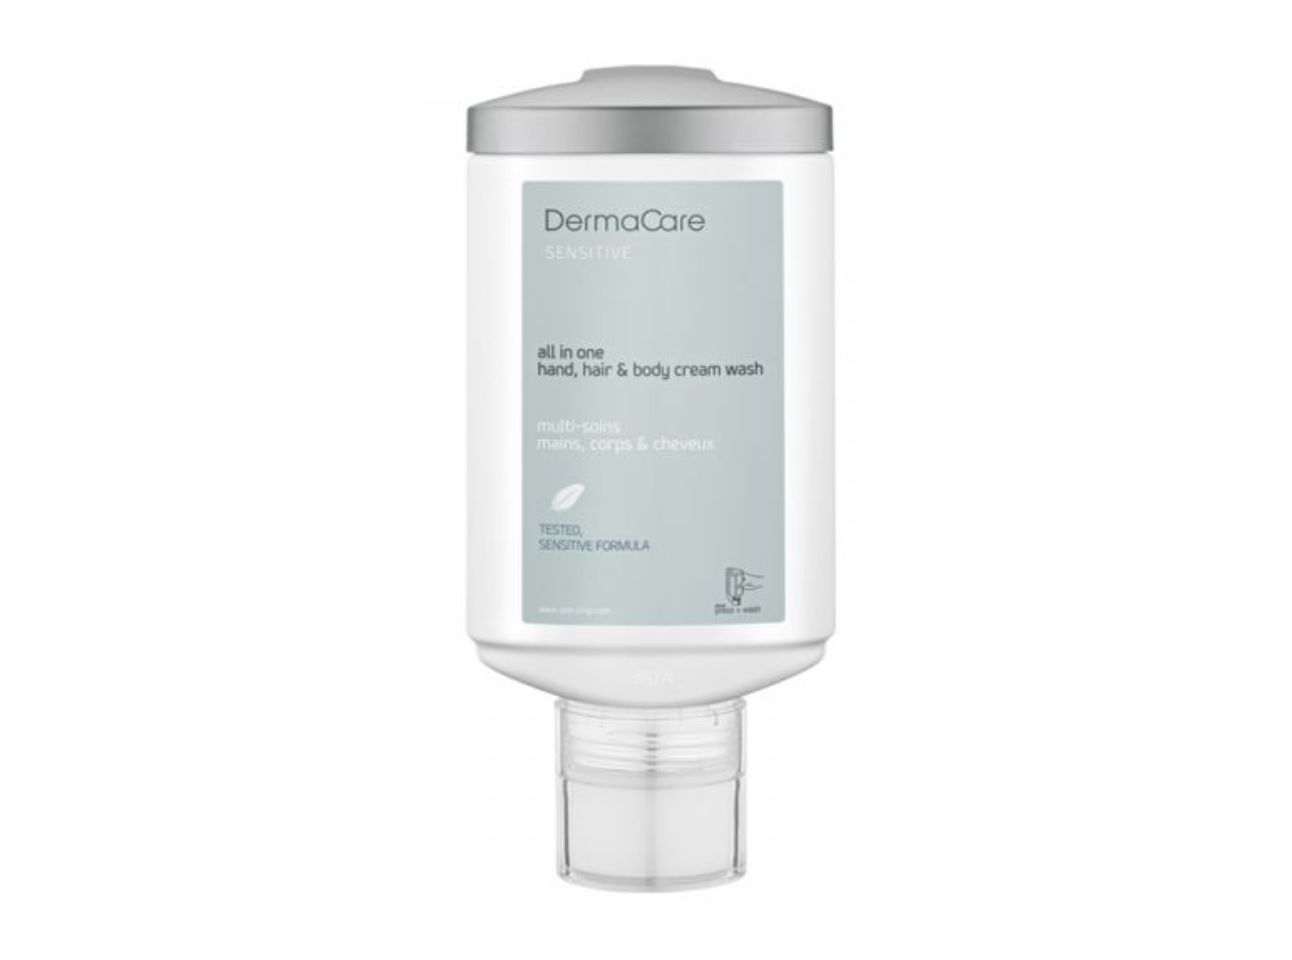 DermaCare SENSITIVE - 3-in Cremeseife, press + wash Spender, 330 ml